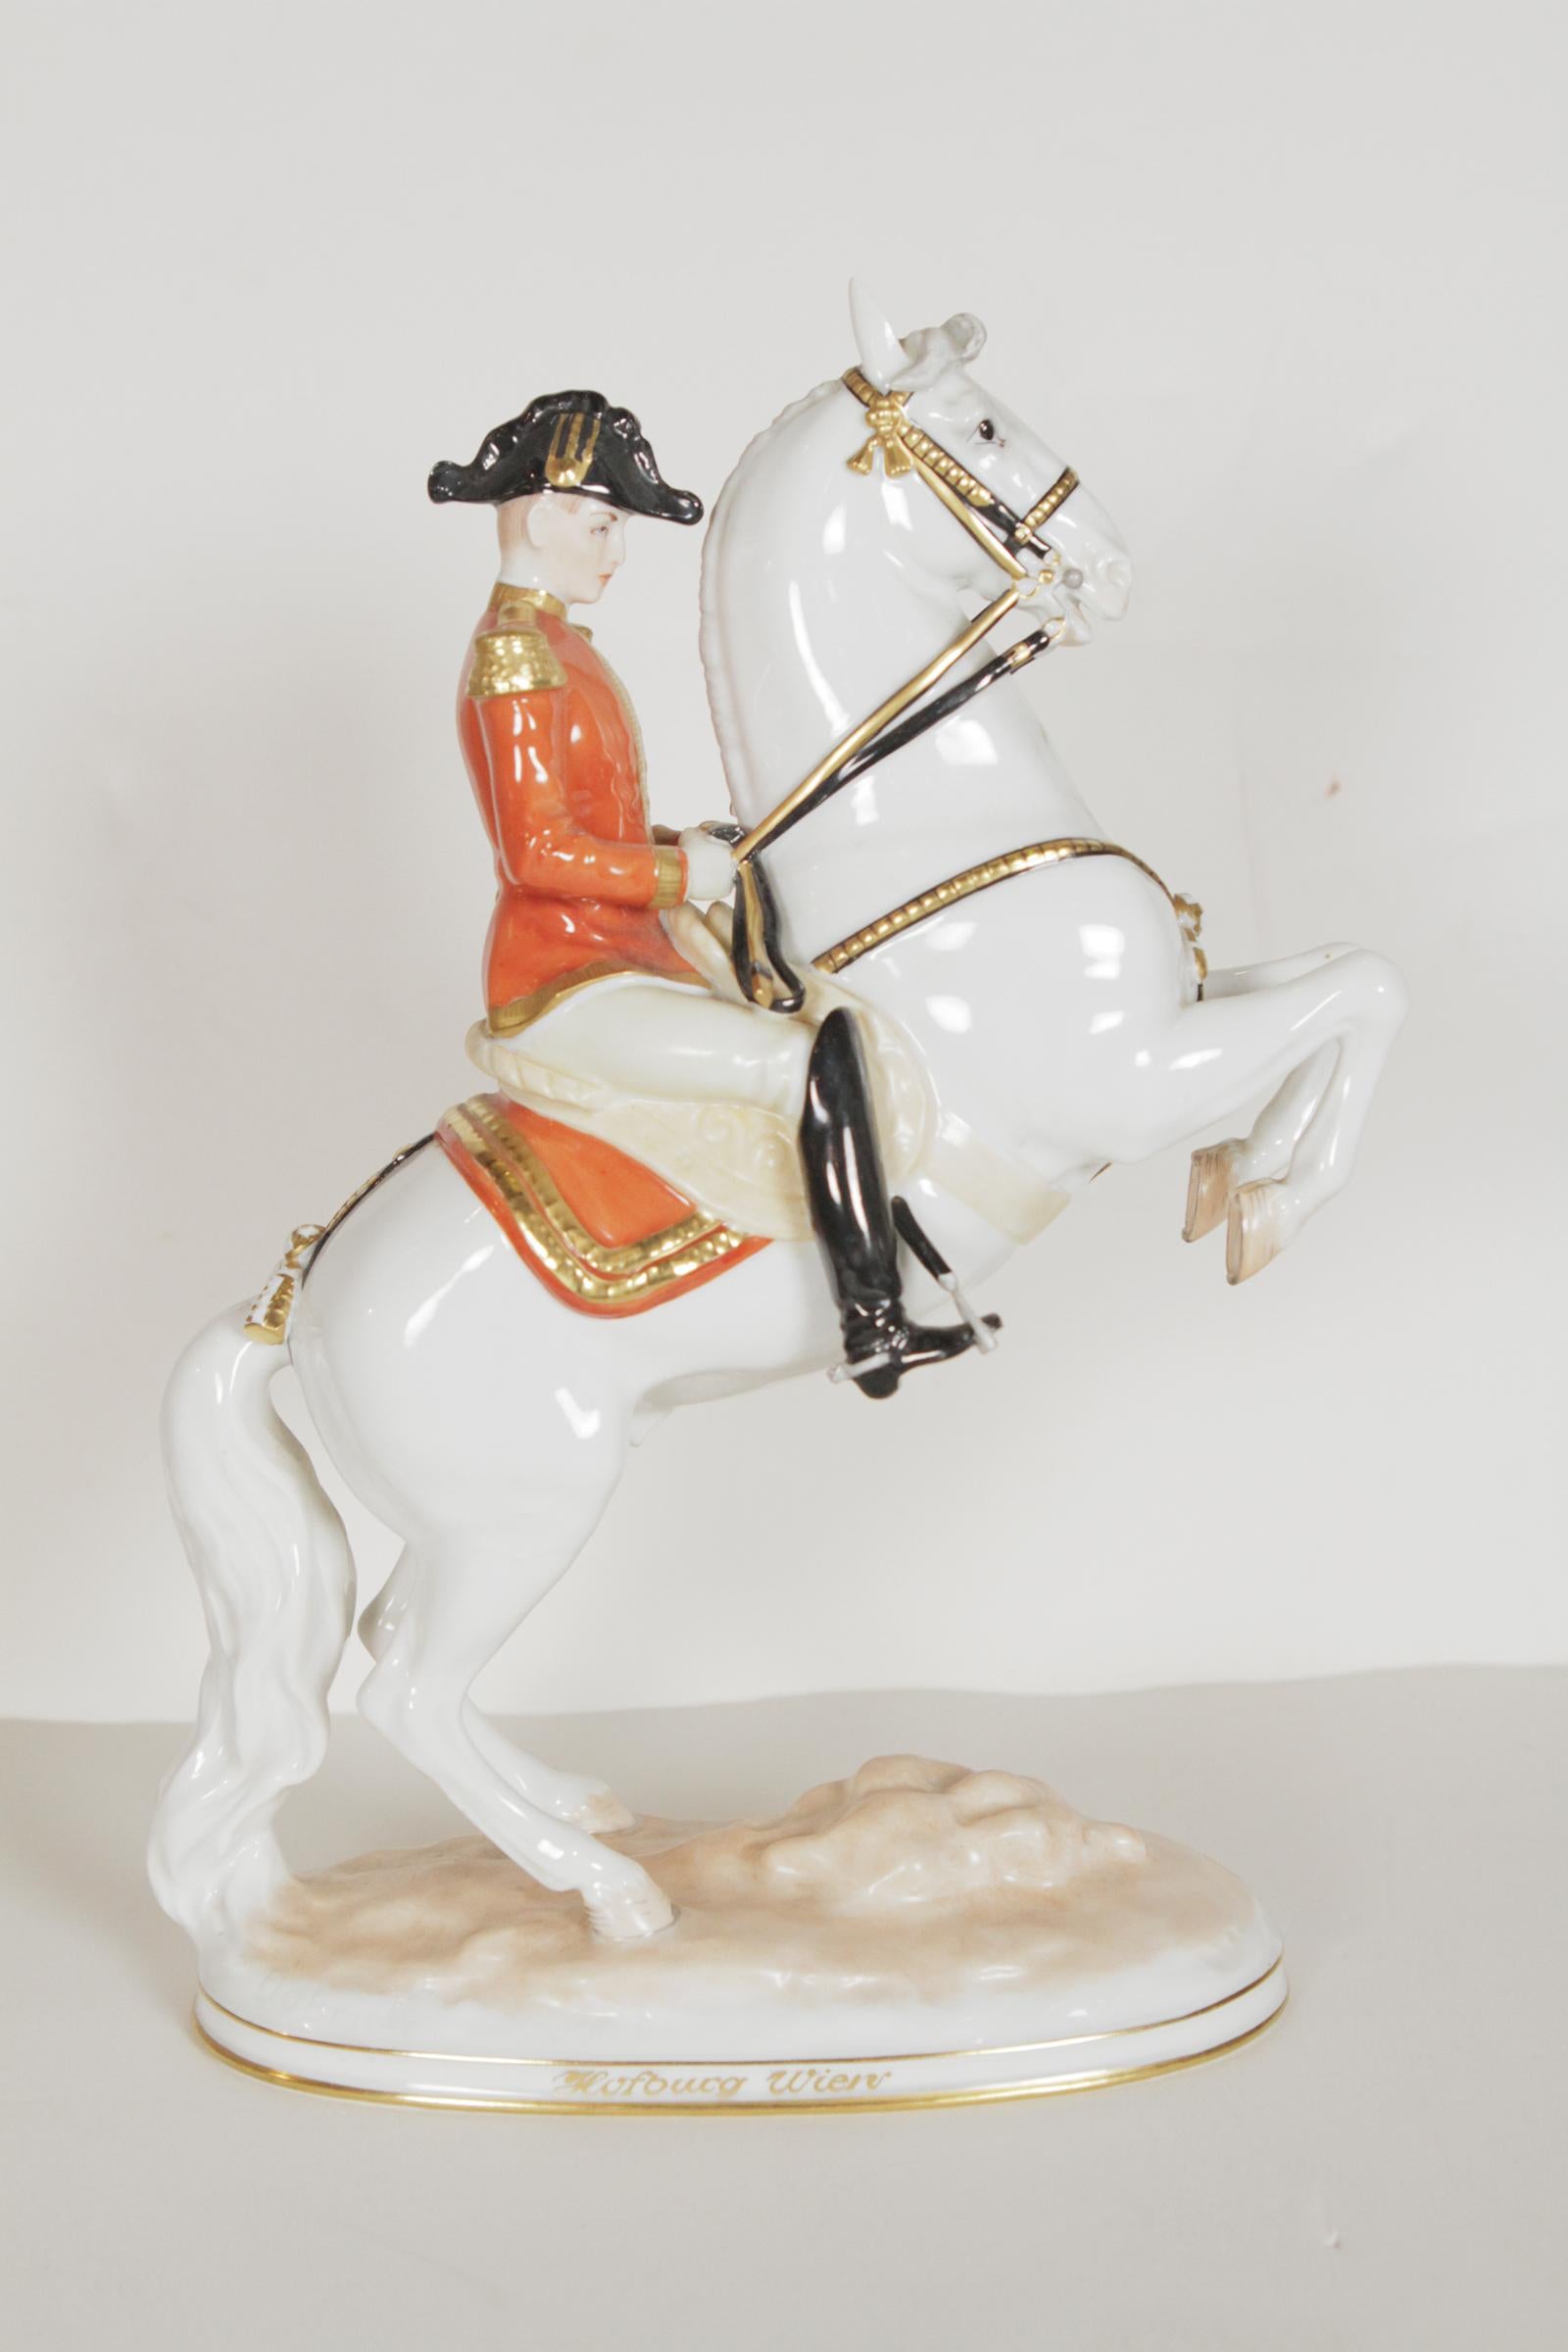 Augurten Royal Vienna porcelain “Lipizzaner Horse Riding School Courbette” circa 1930.
Dimensions: 8” W x 4” D x 12” H